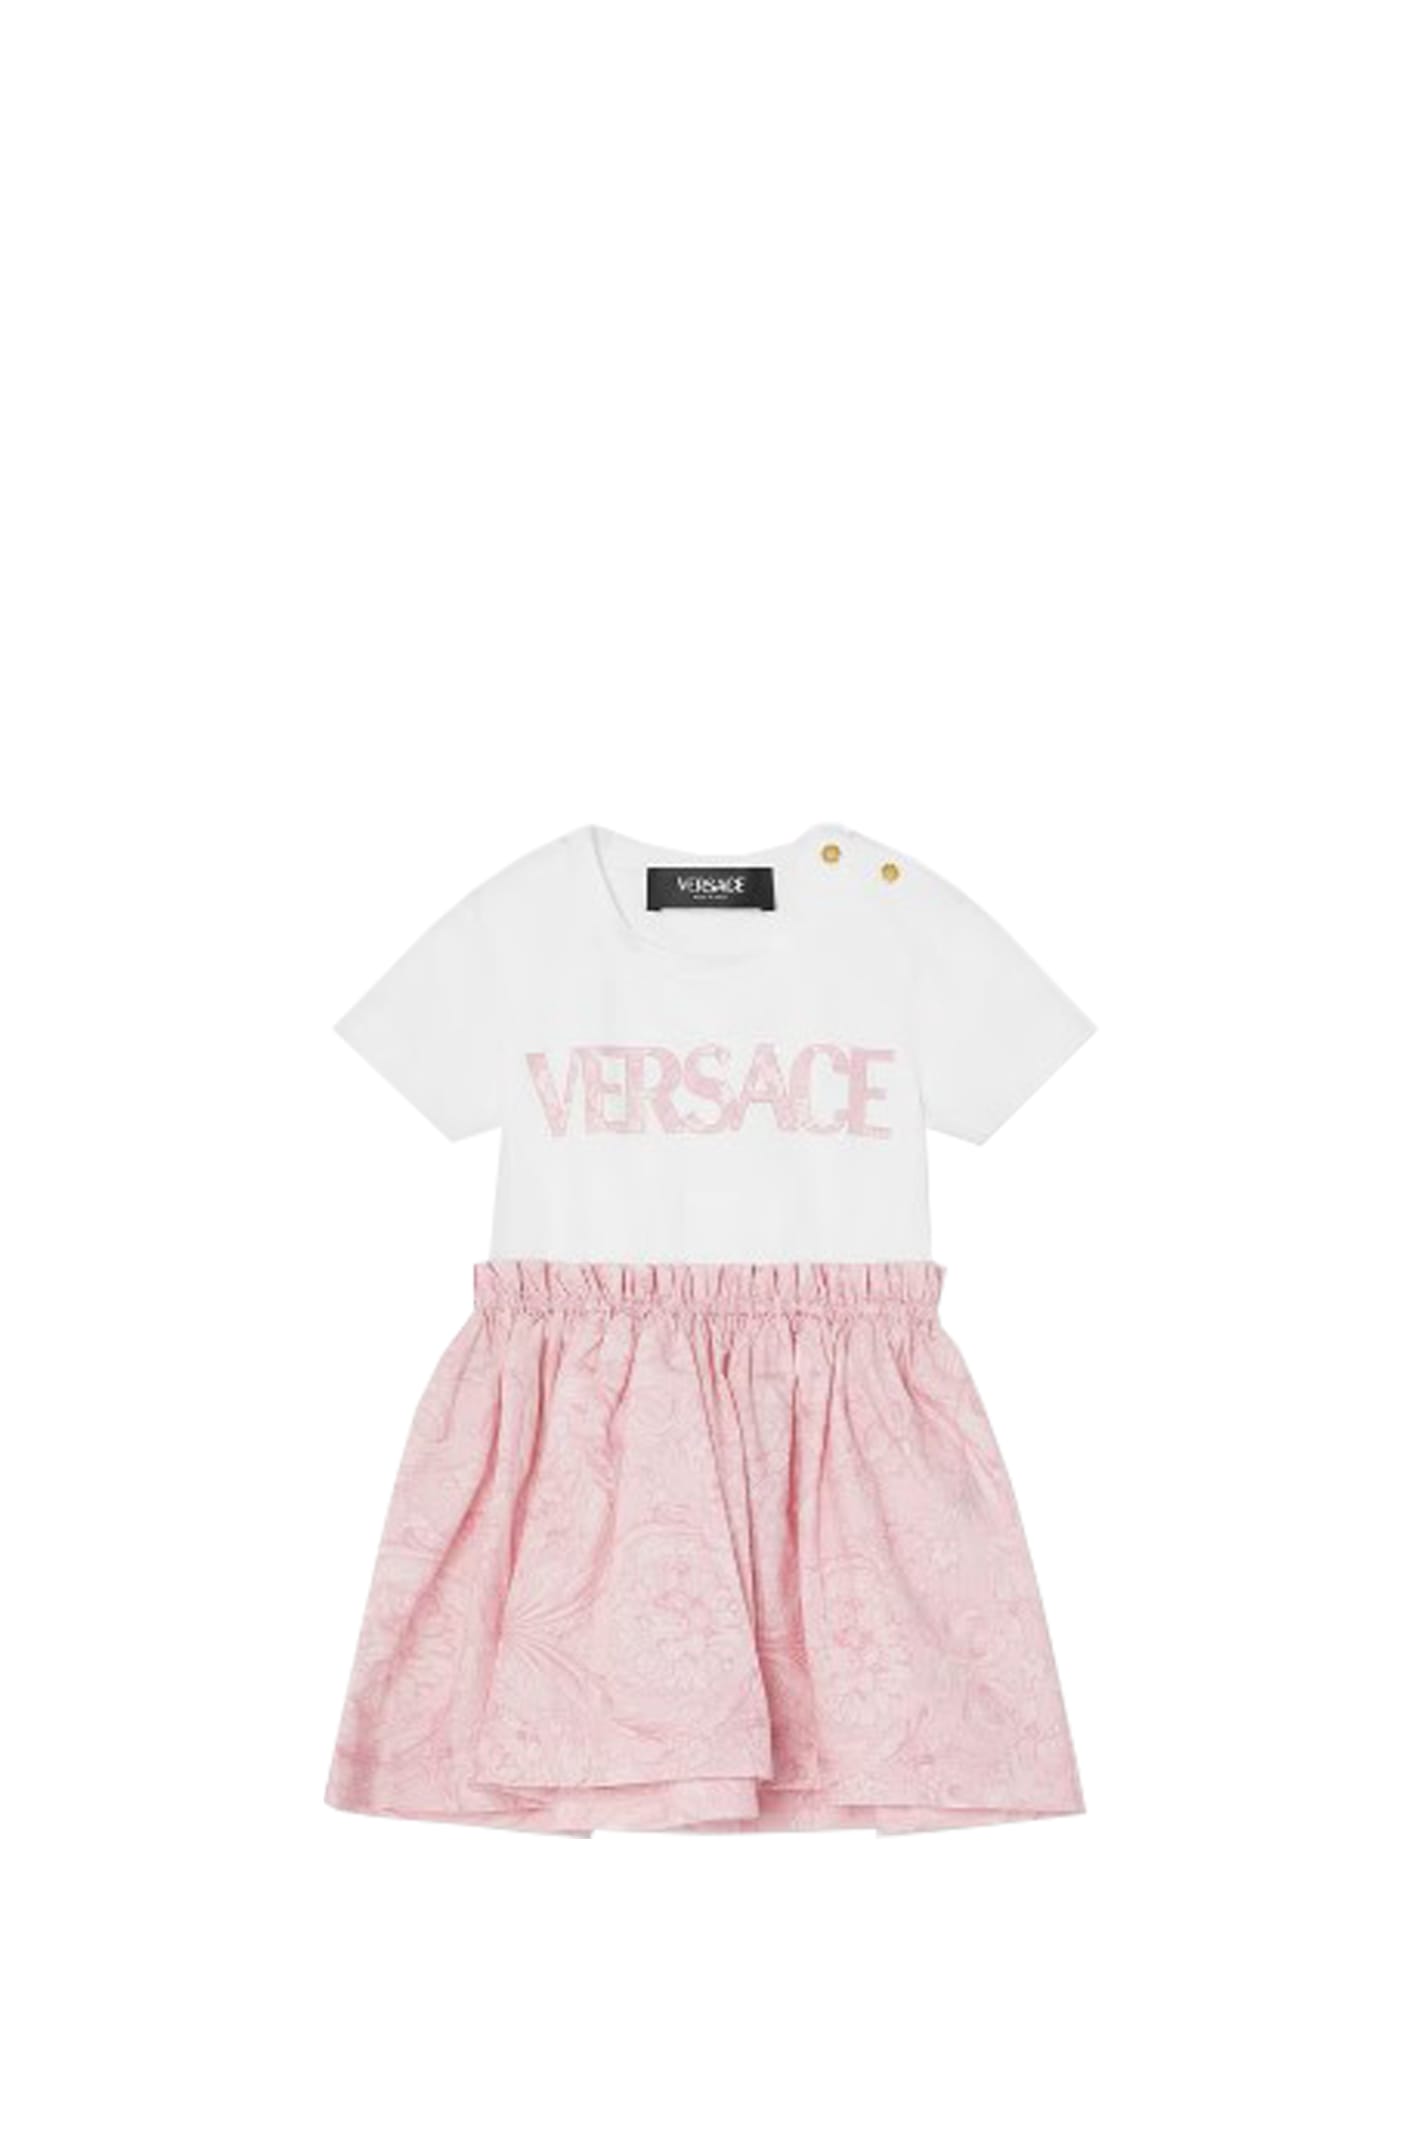 VERSACE BAROCCO BABY T-SHIRT DRESS